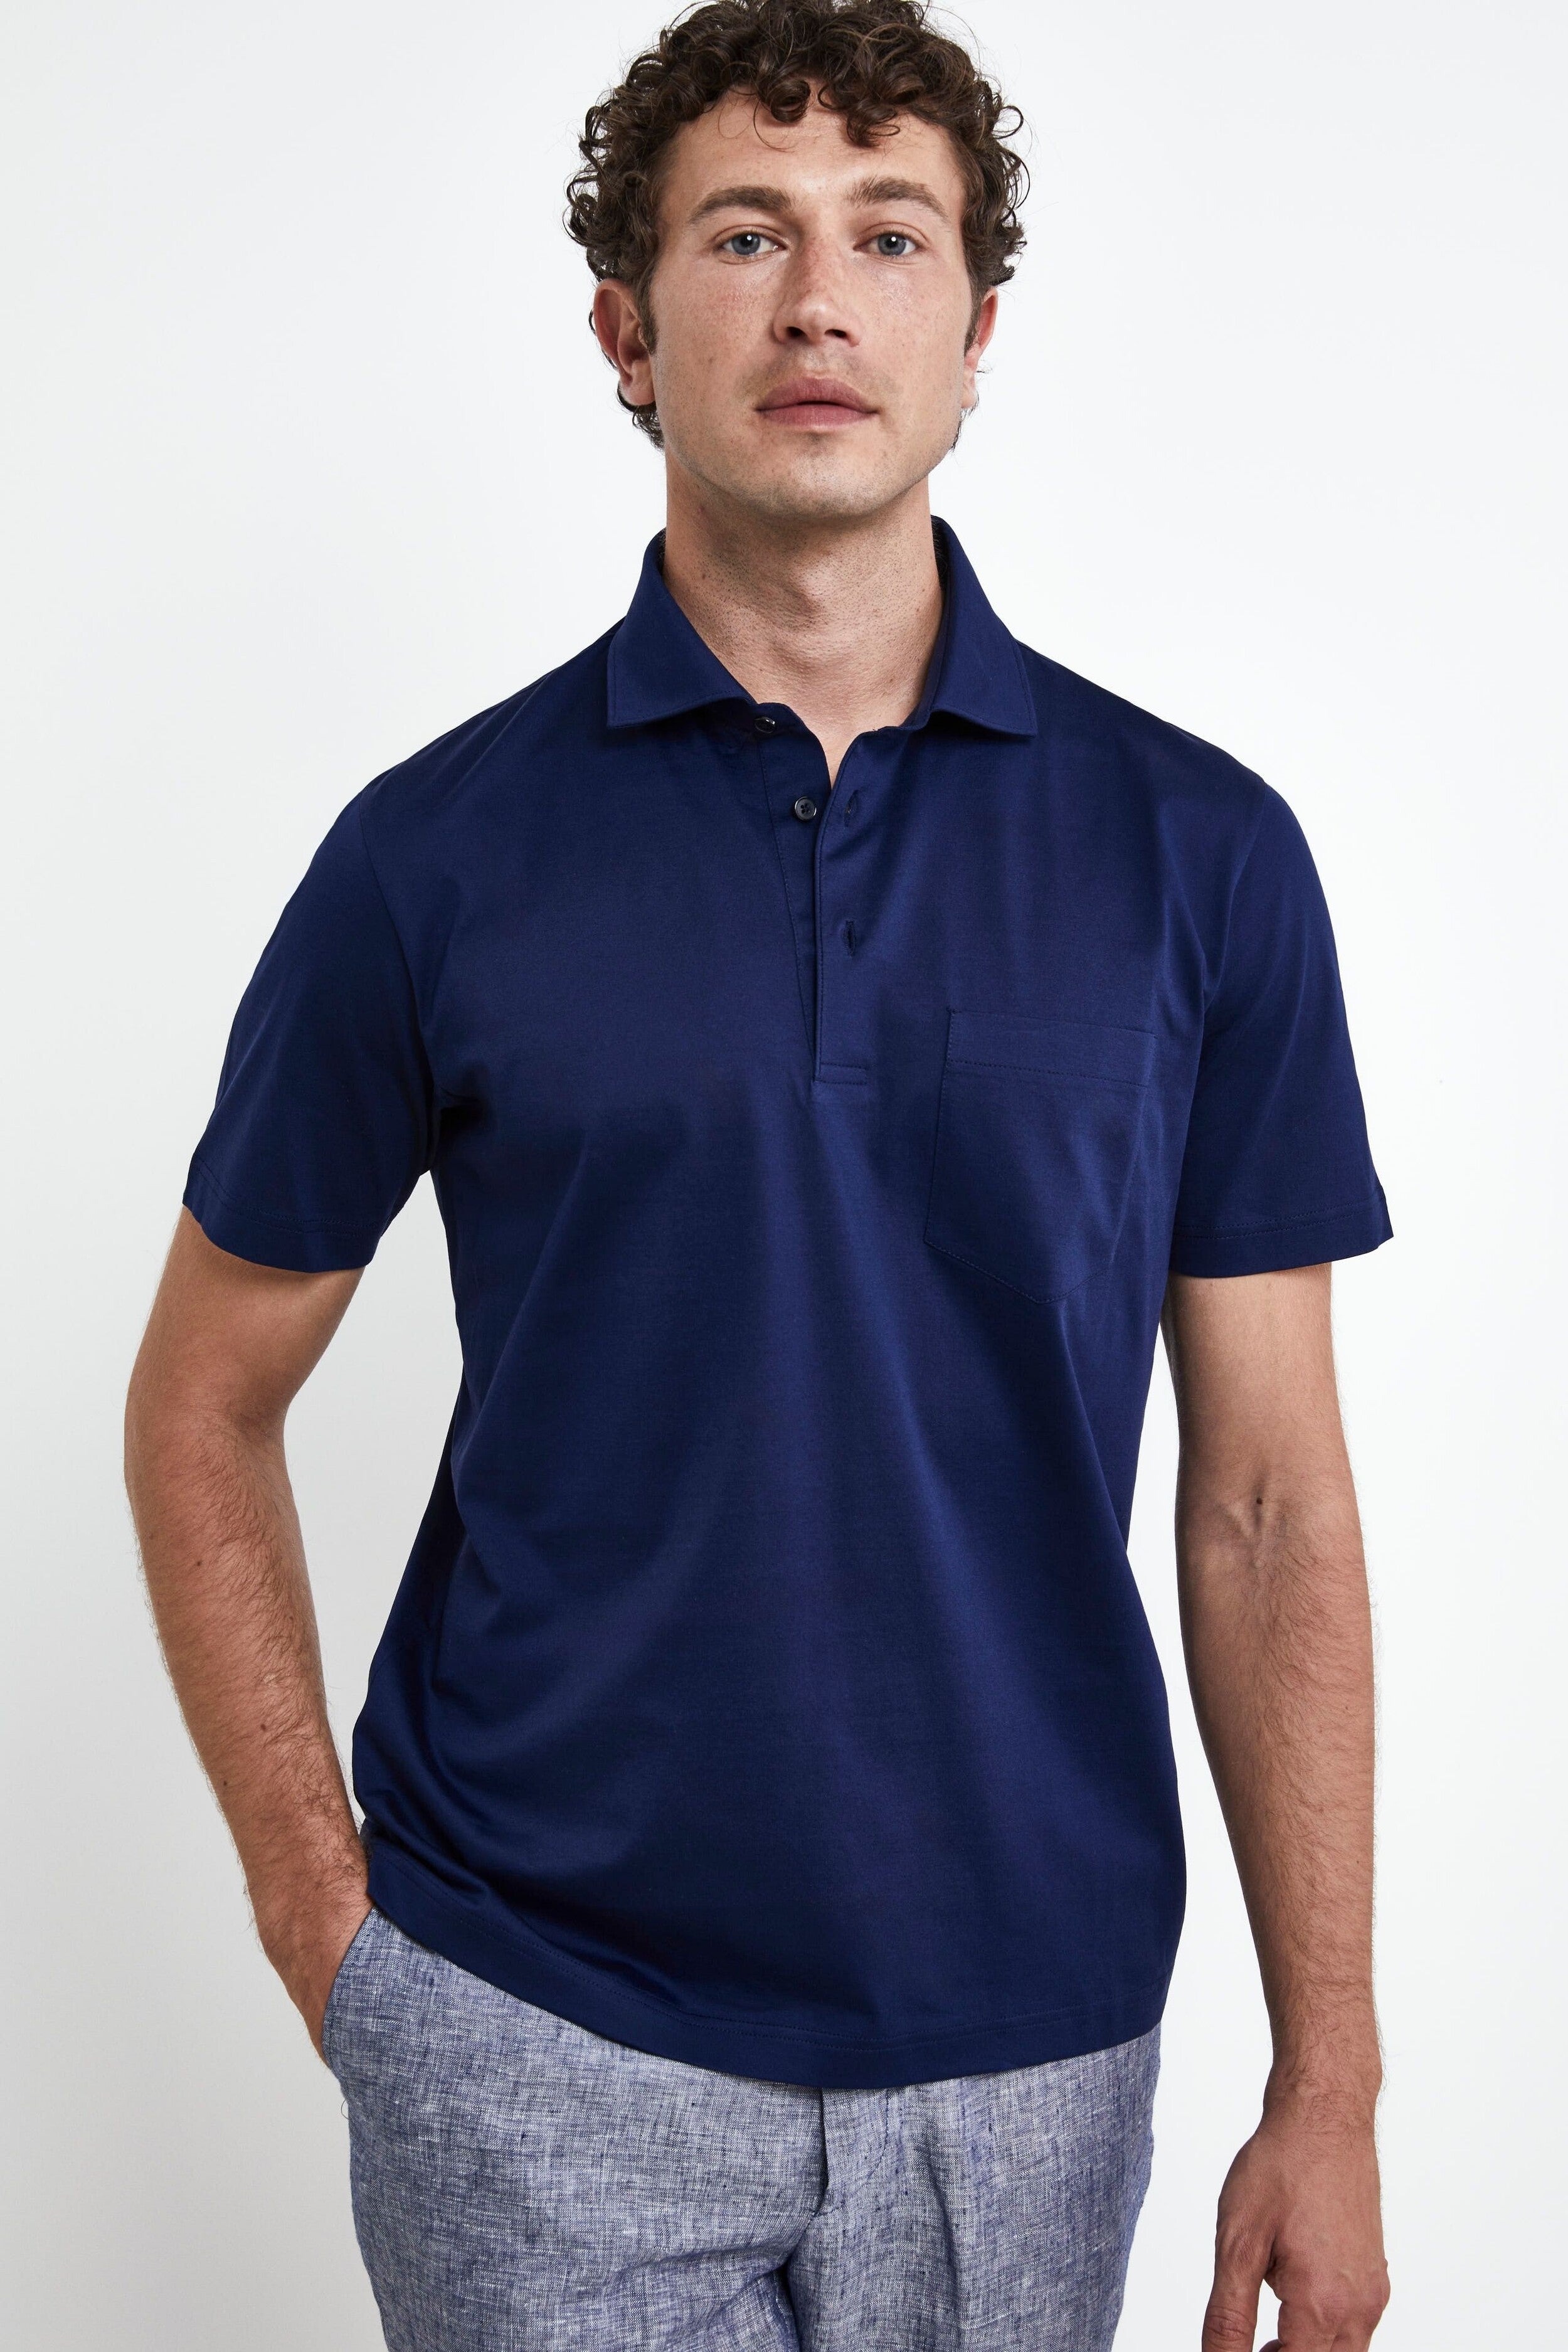 Polo shirt with pocket in lisle thread - Medium blue